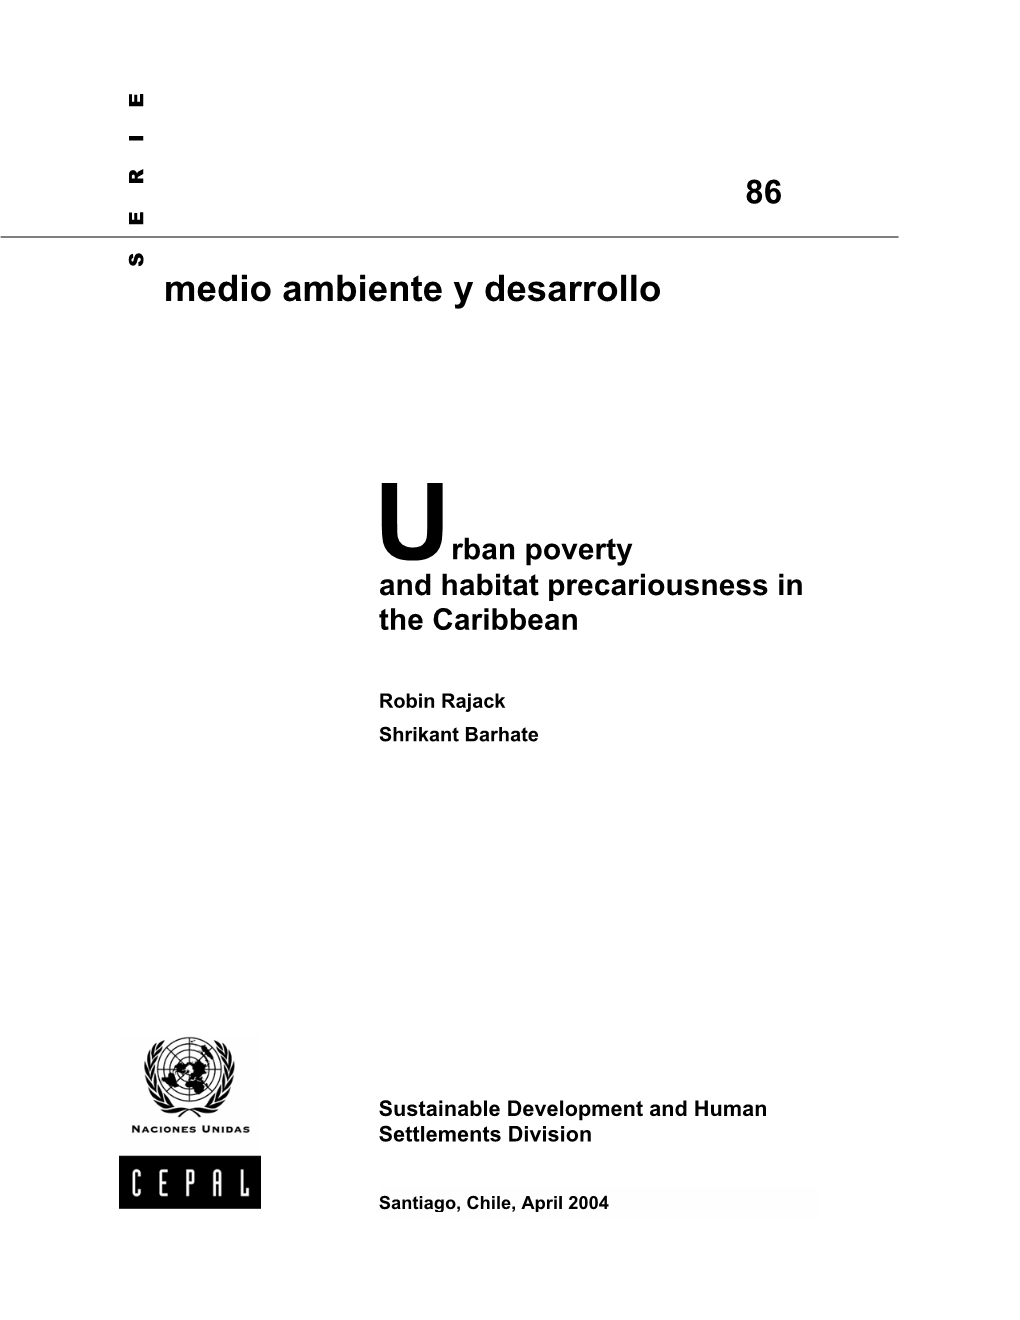 Urban Poverty and Habitat Precariousness in the Caribbean